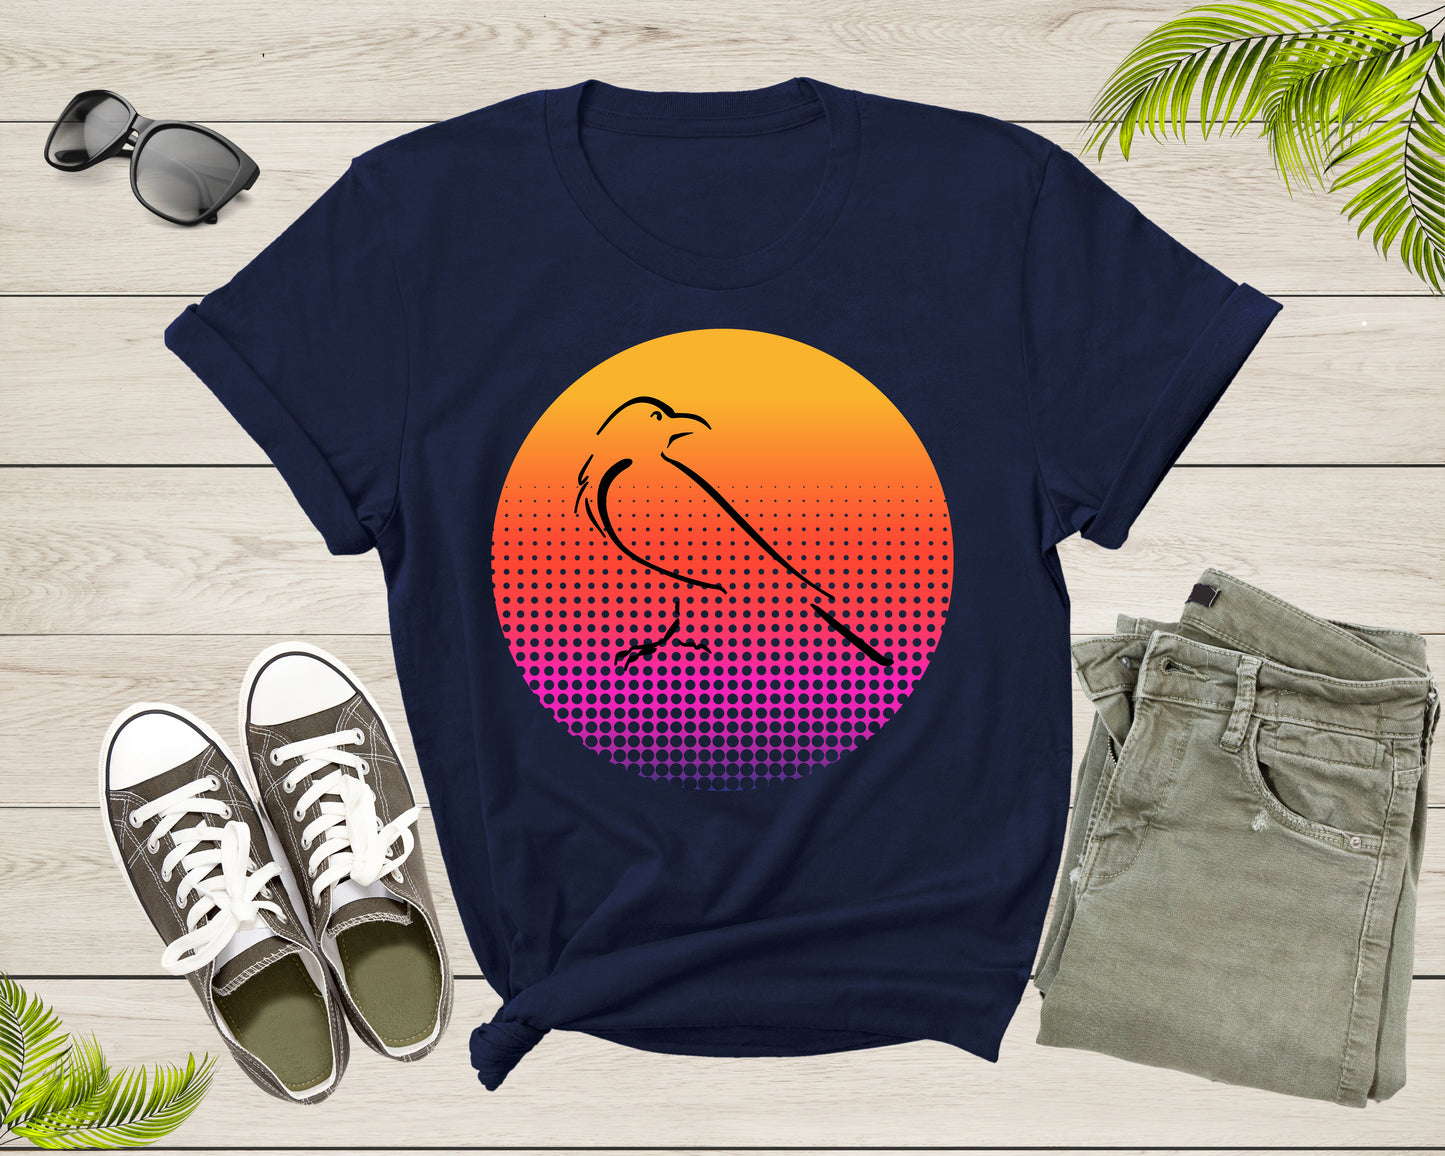 Black Crow Bird Silhouette At Sunset Wildlife Nature Animal T-shirt Crow Lover Gift Shirt For Men Women Kids Crow Themed Graphic Tshirt